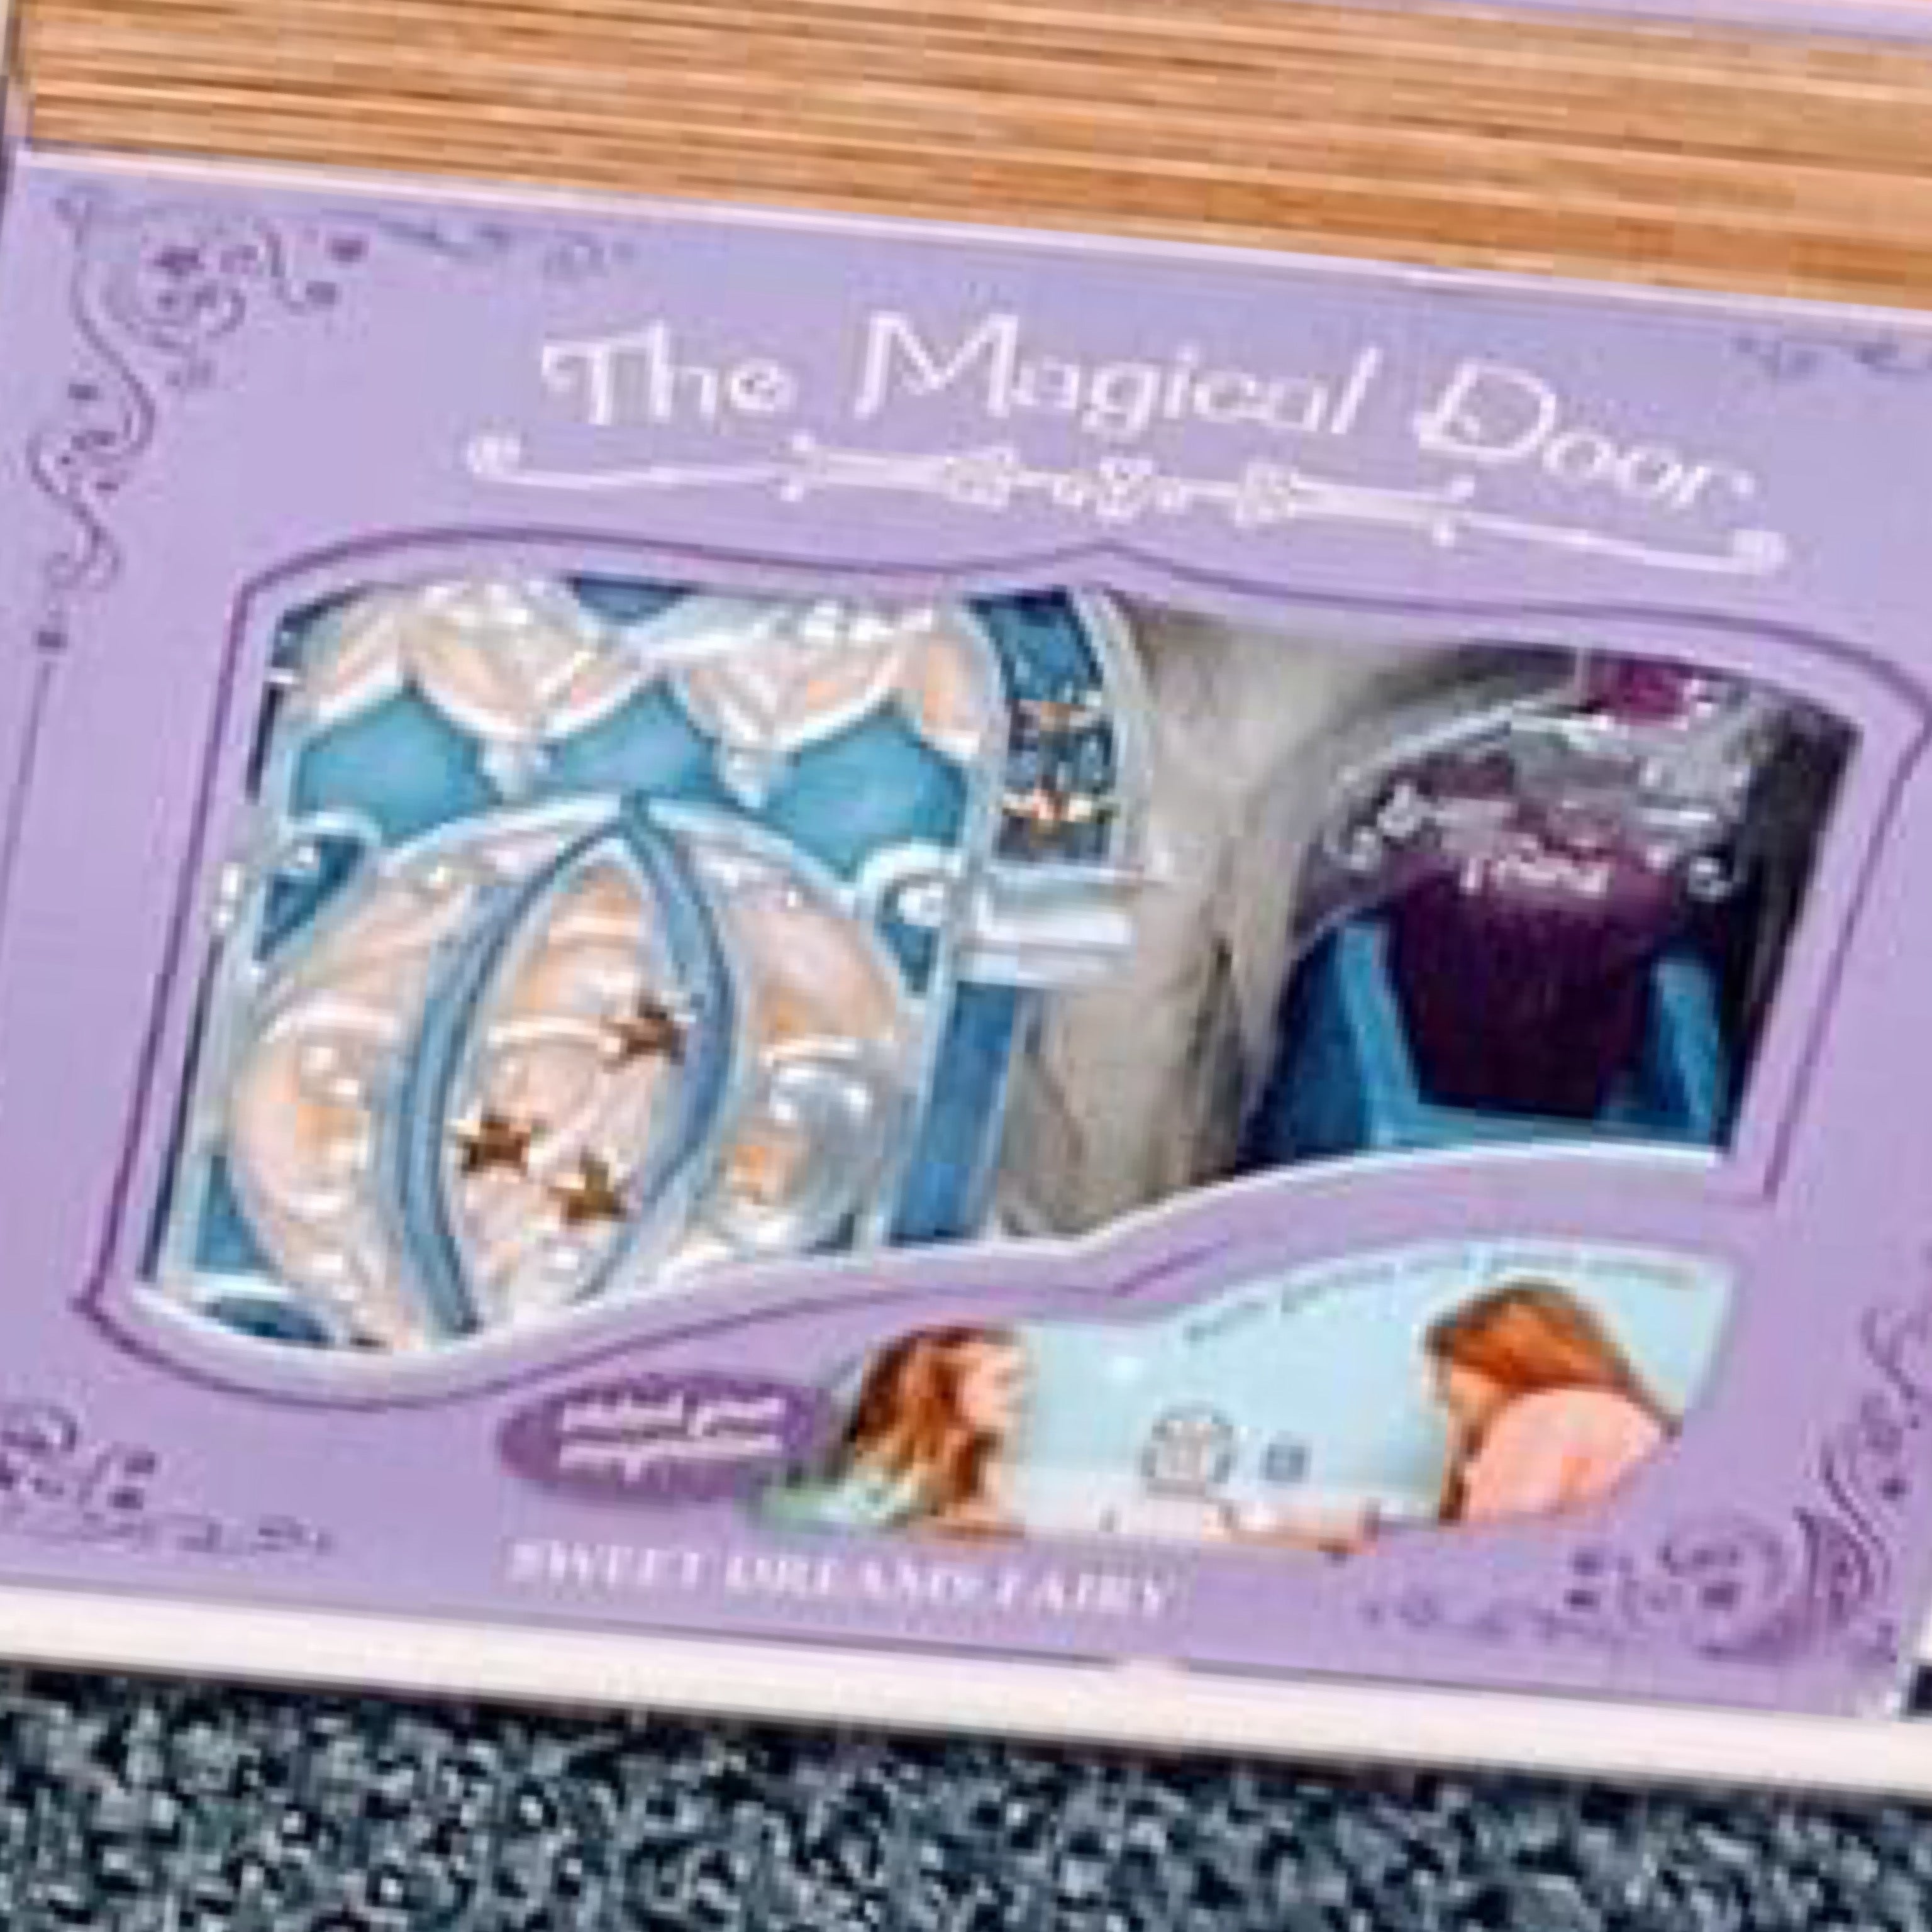 The Magical Door~Sweet Dreams Fairy Box Set